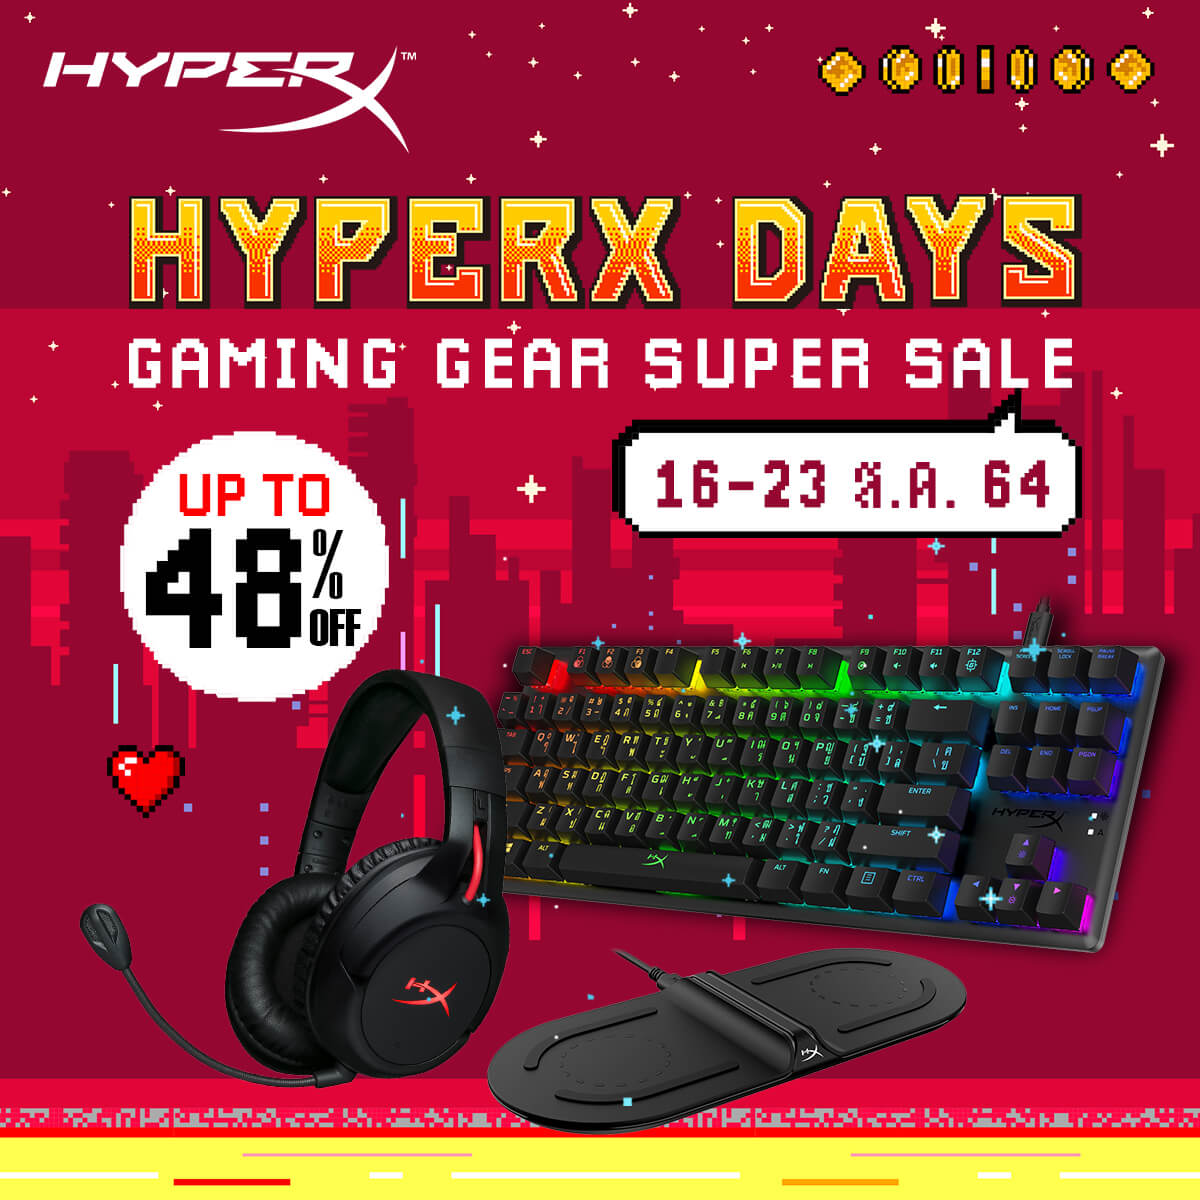 hyperx day promotion aug 2021 4 เตรียมพบกับโปรโมชั่น HyperX Days! จัดเต็มกับข้อเสนอสุดพิเศษ สำหรับอุปกรณ์เล่นเกมหลากหลายรุ่น ให้คุณช้อปได้แล้วตอนนี้ Gaming Gear Super Sale! HyperX พร้อมมอบข้อเสนอสุดพิเศษมากมาย ที่คุณไม่ควรพลาด